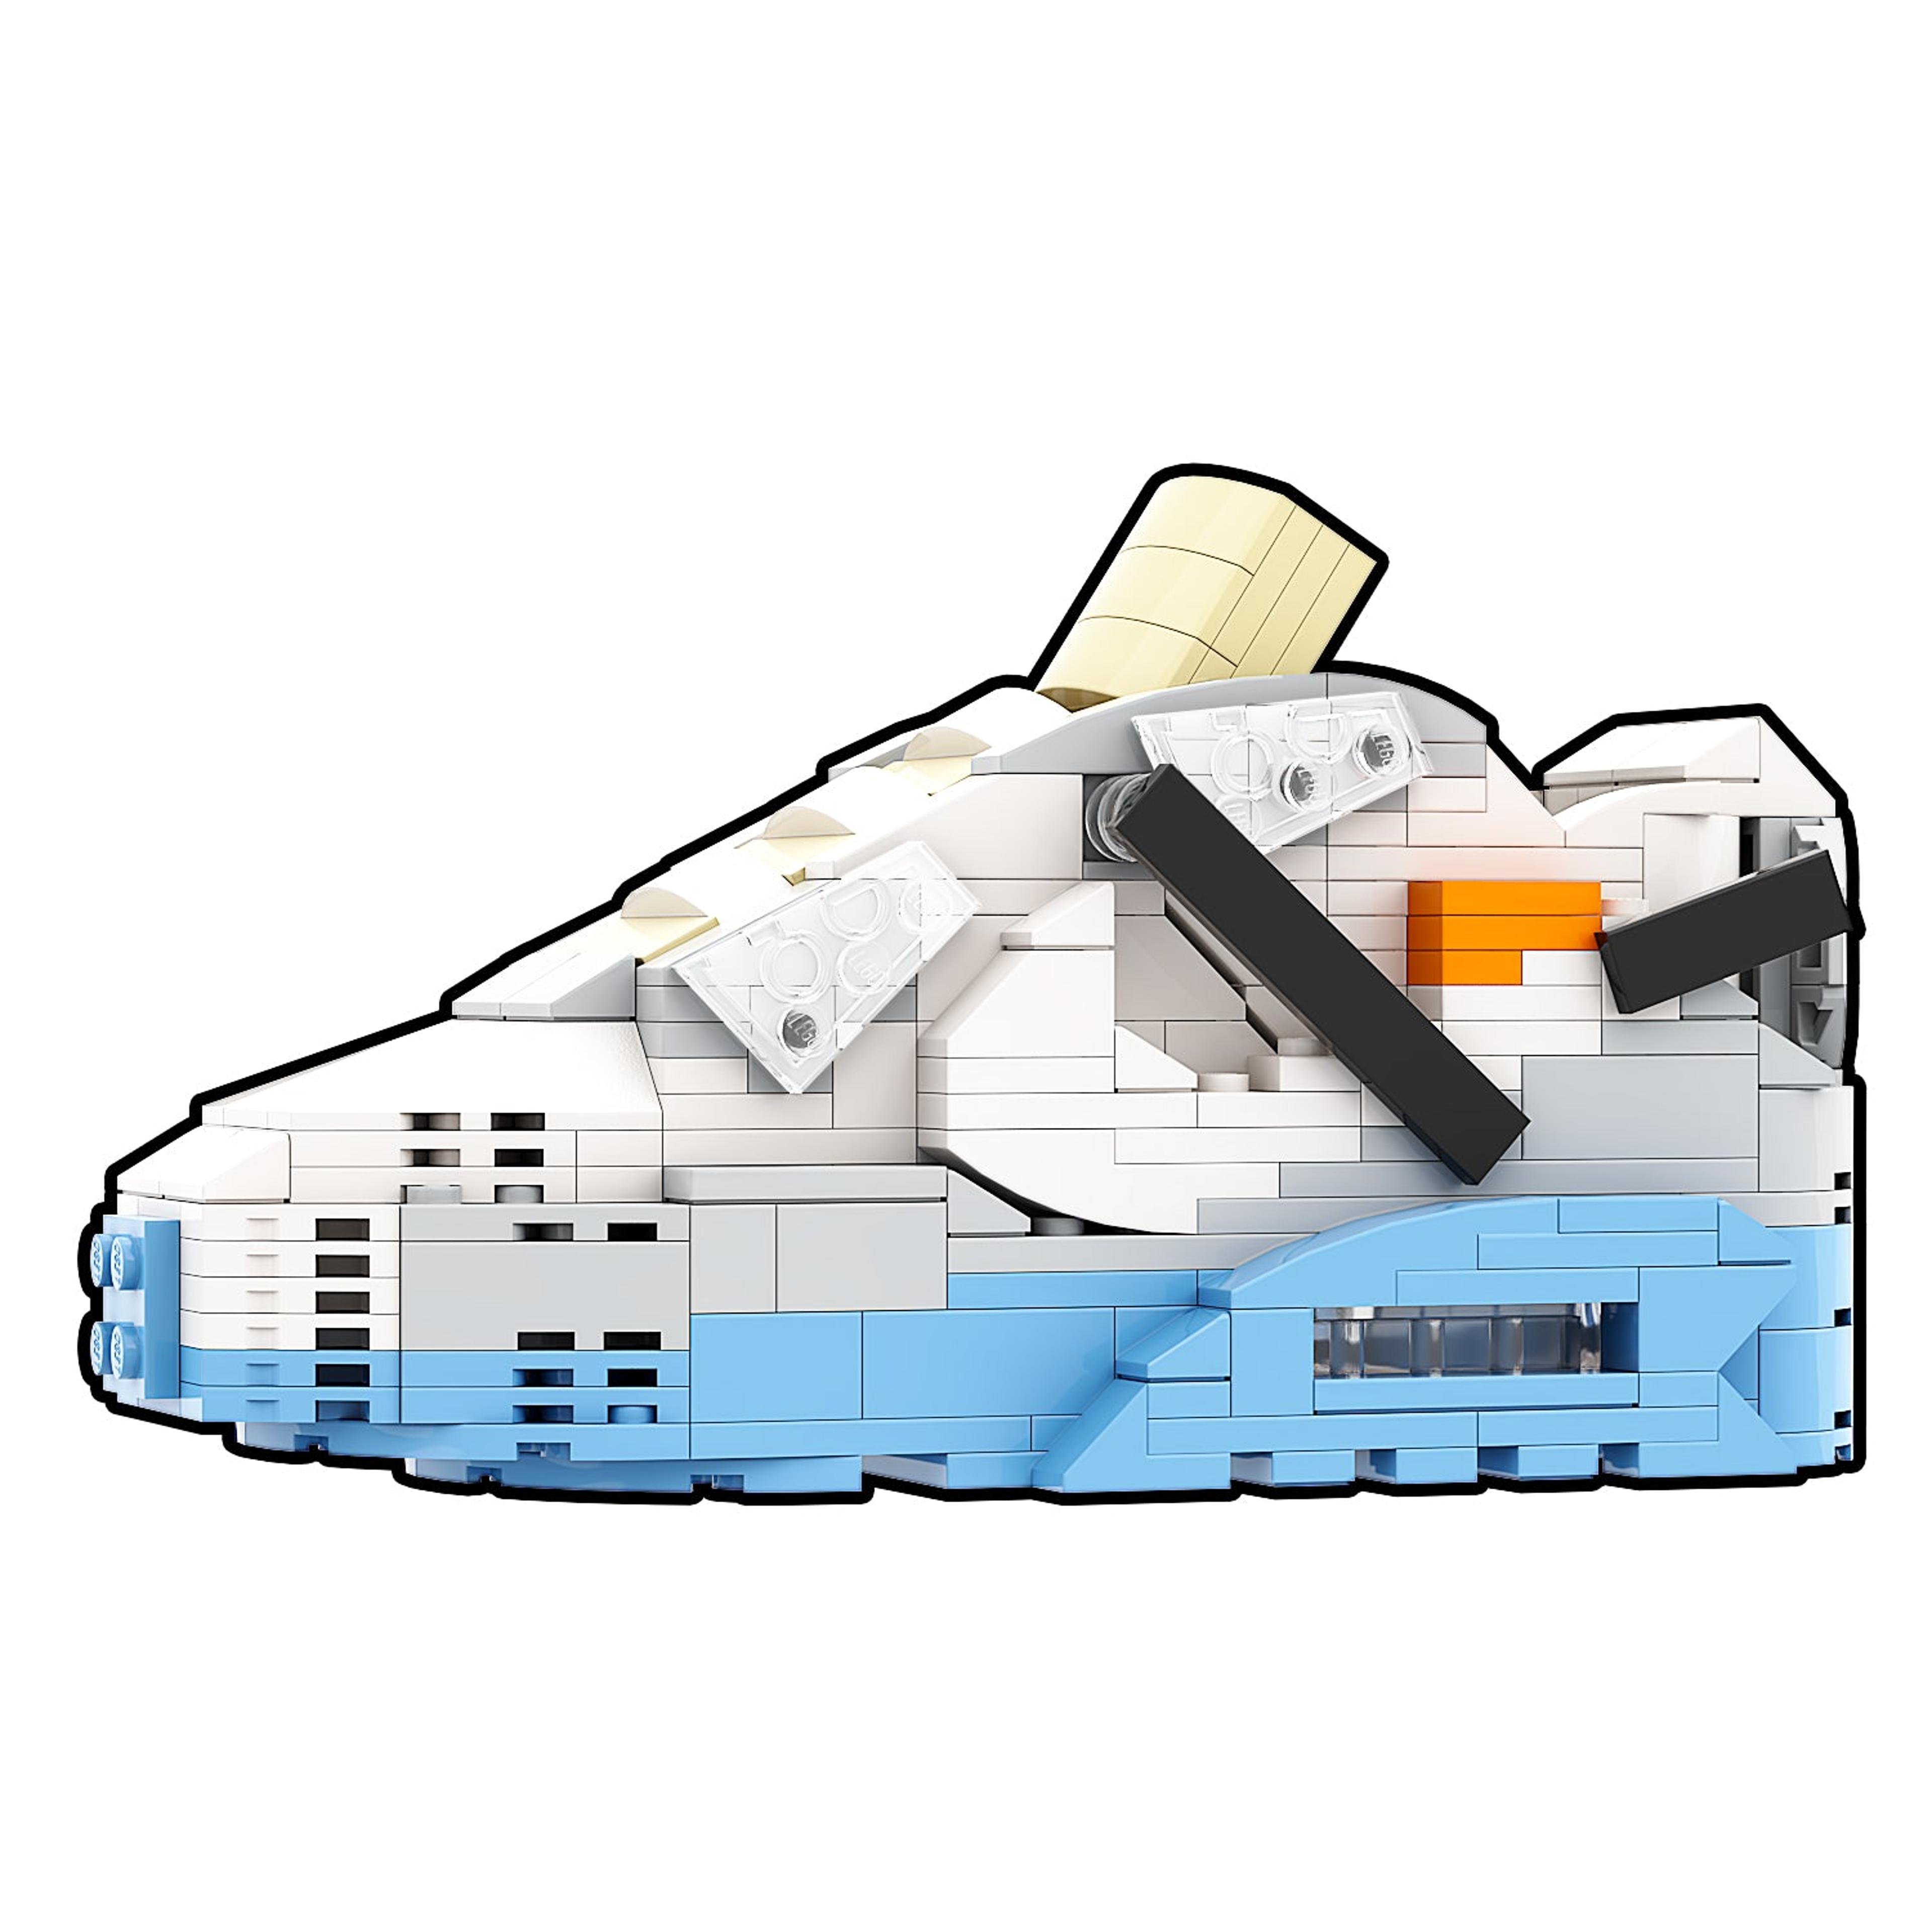 REGULAR Air Max 90 "Off-White White" Sneaker Bricks with Mini Fi